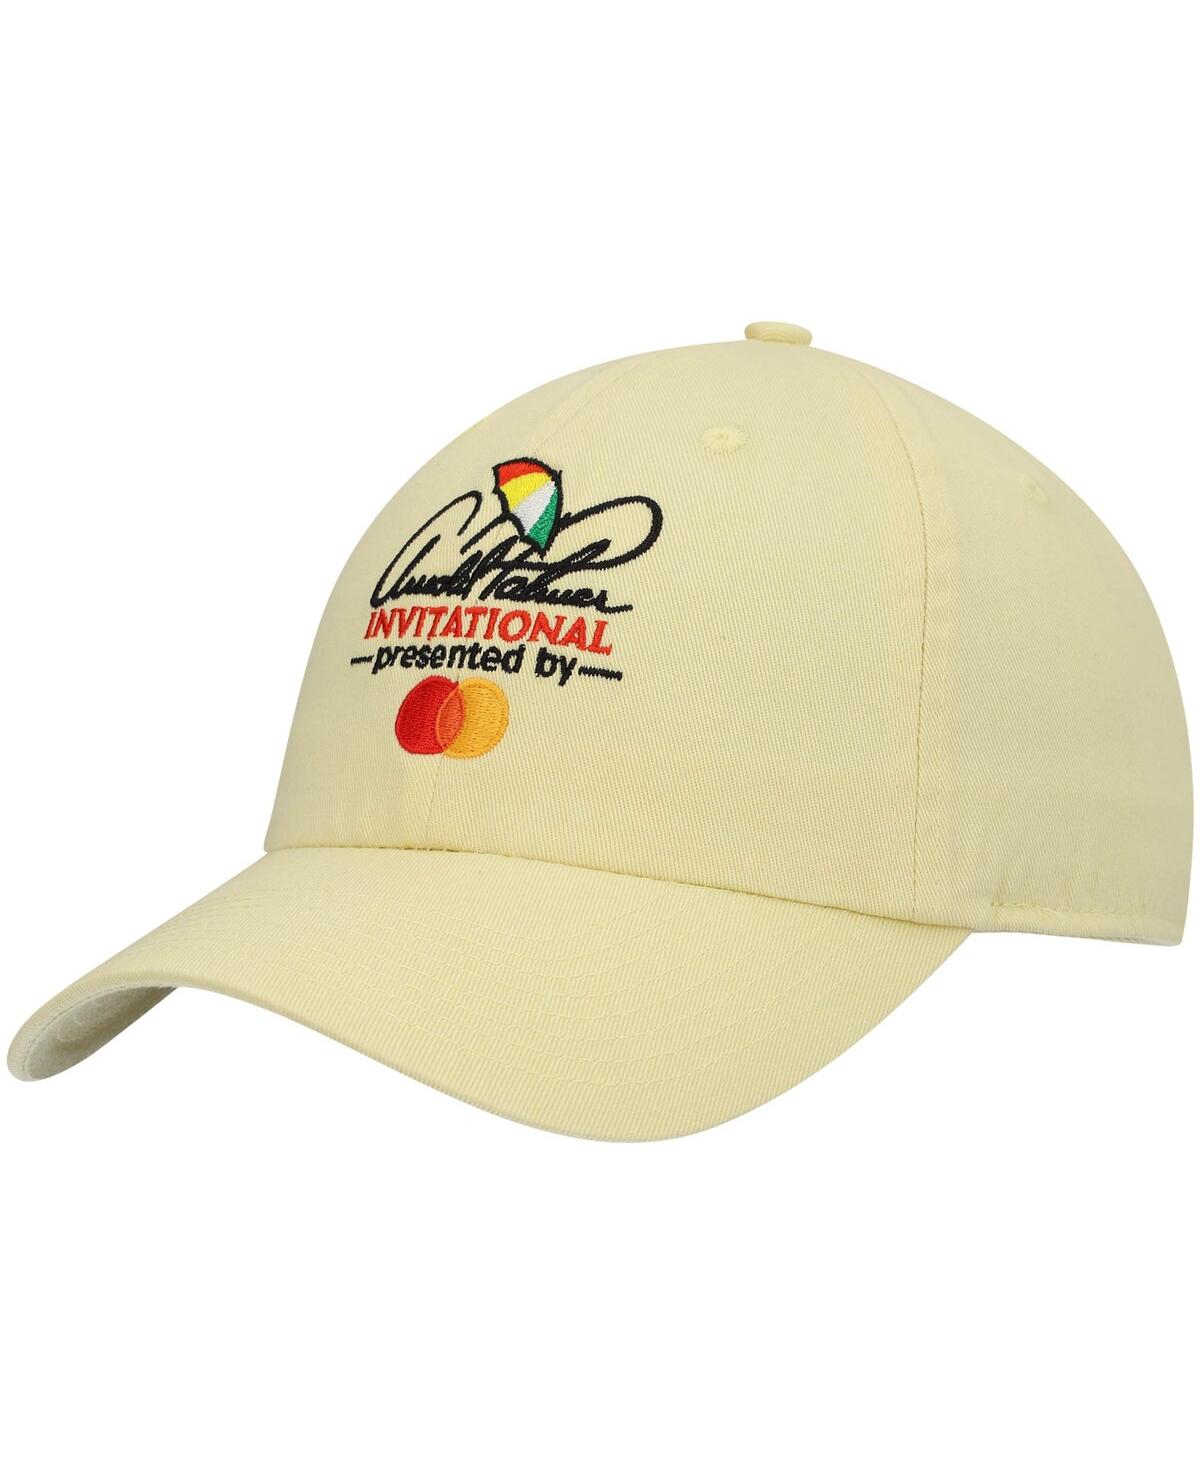 Men's Yellow Arnold Palmer Invitational Logo Adjustable Hat - Yellow